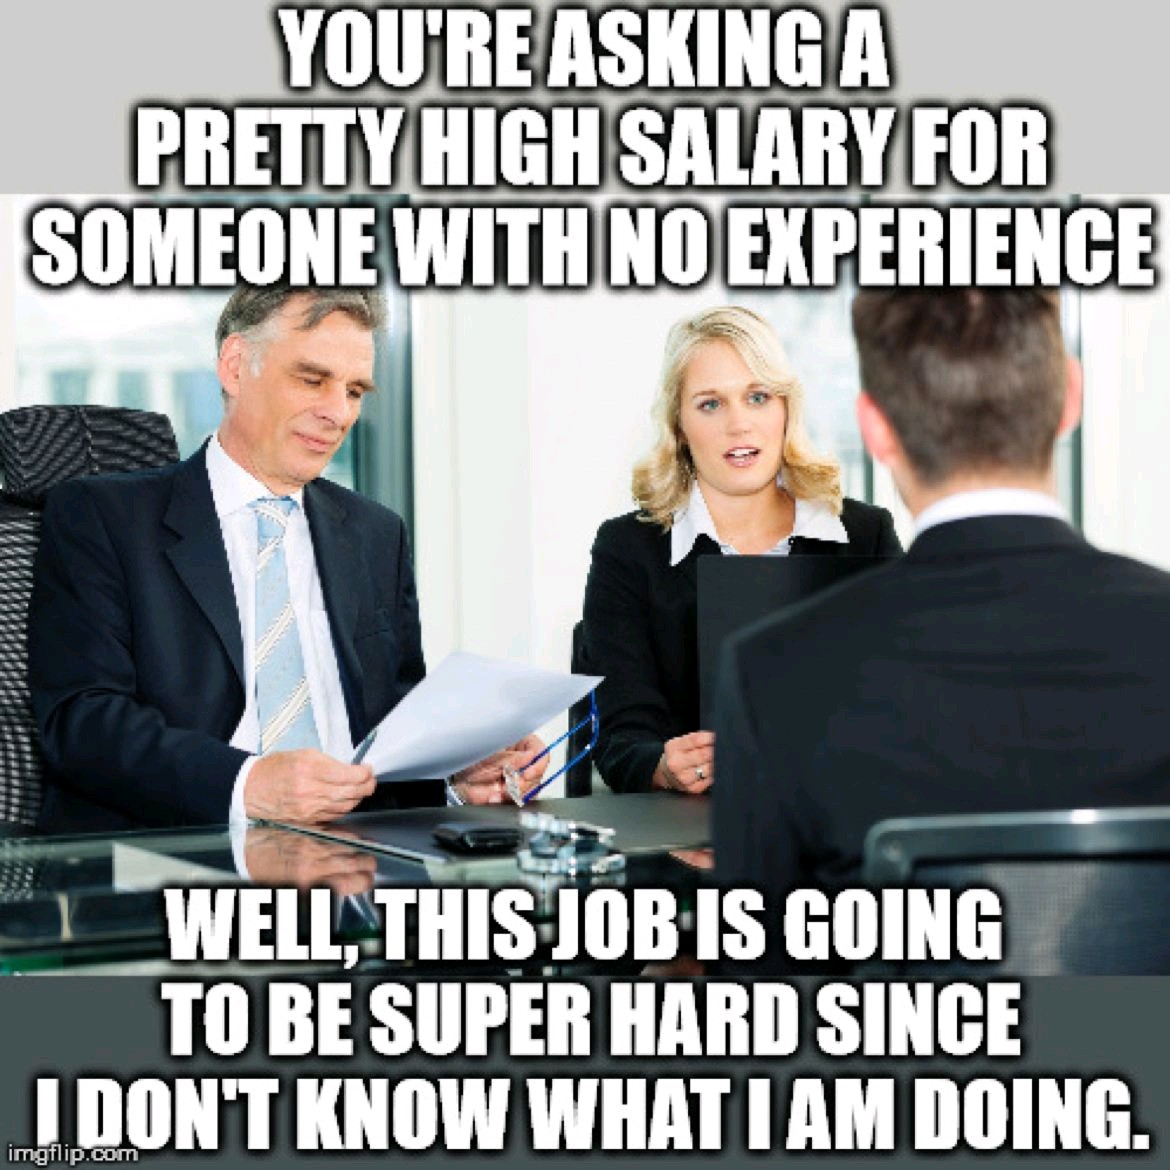 #NoExperienceNoSalary #LearningOnTheJob #ExperienceVsSalary #HardWorkNoExperience #SalaryExpectations #EntryLevelStruggles #PayMeToLearn #TrialByFire #NoPainNoGain #ExperienceMatters #jobmeme #meme #funny